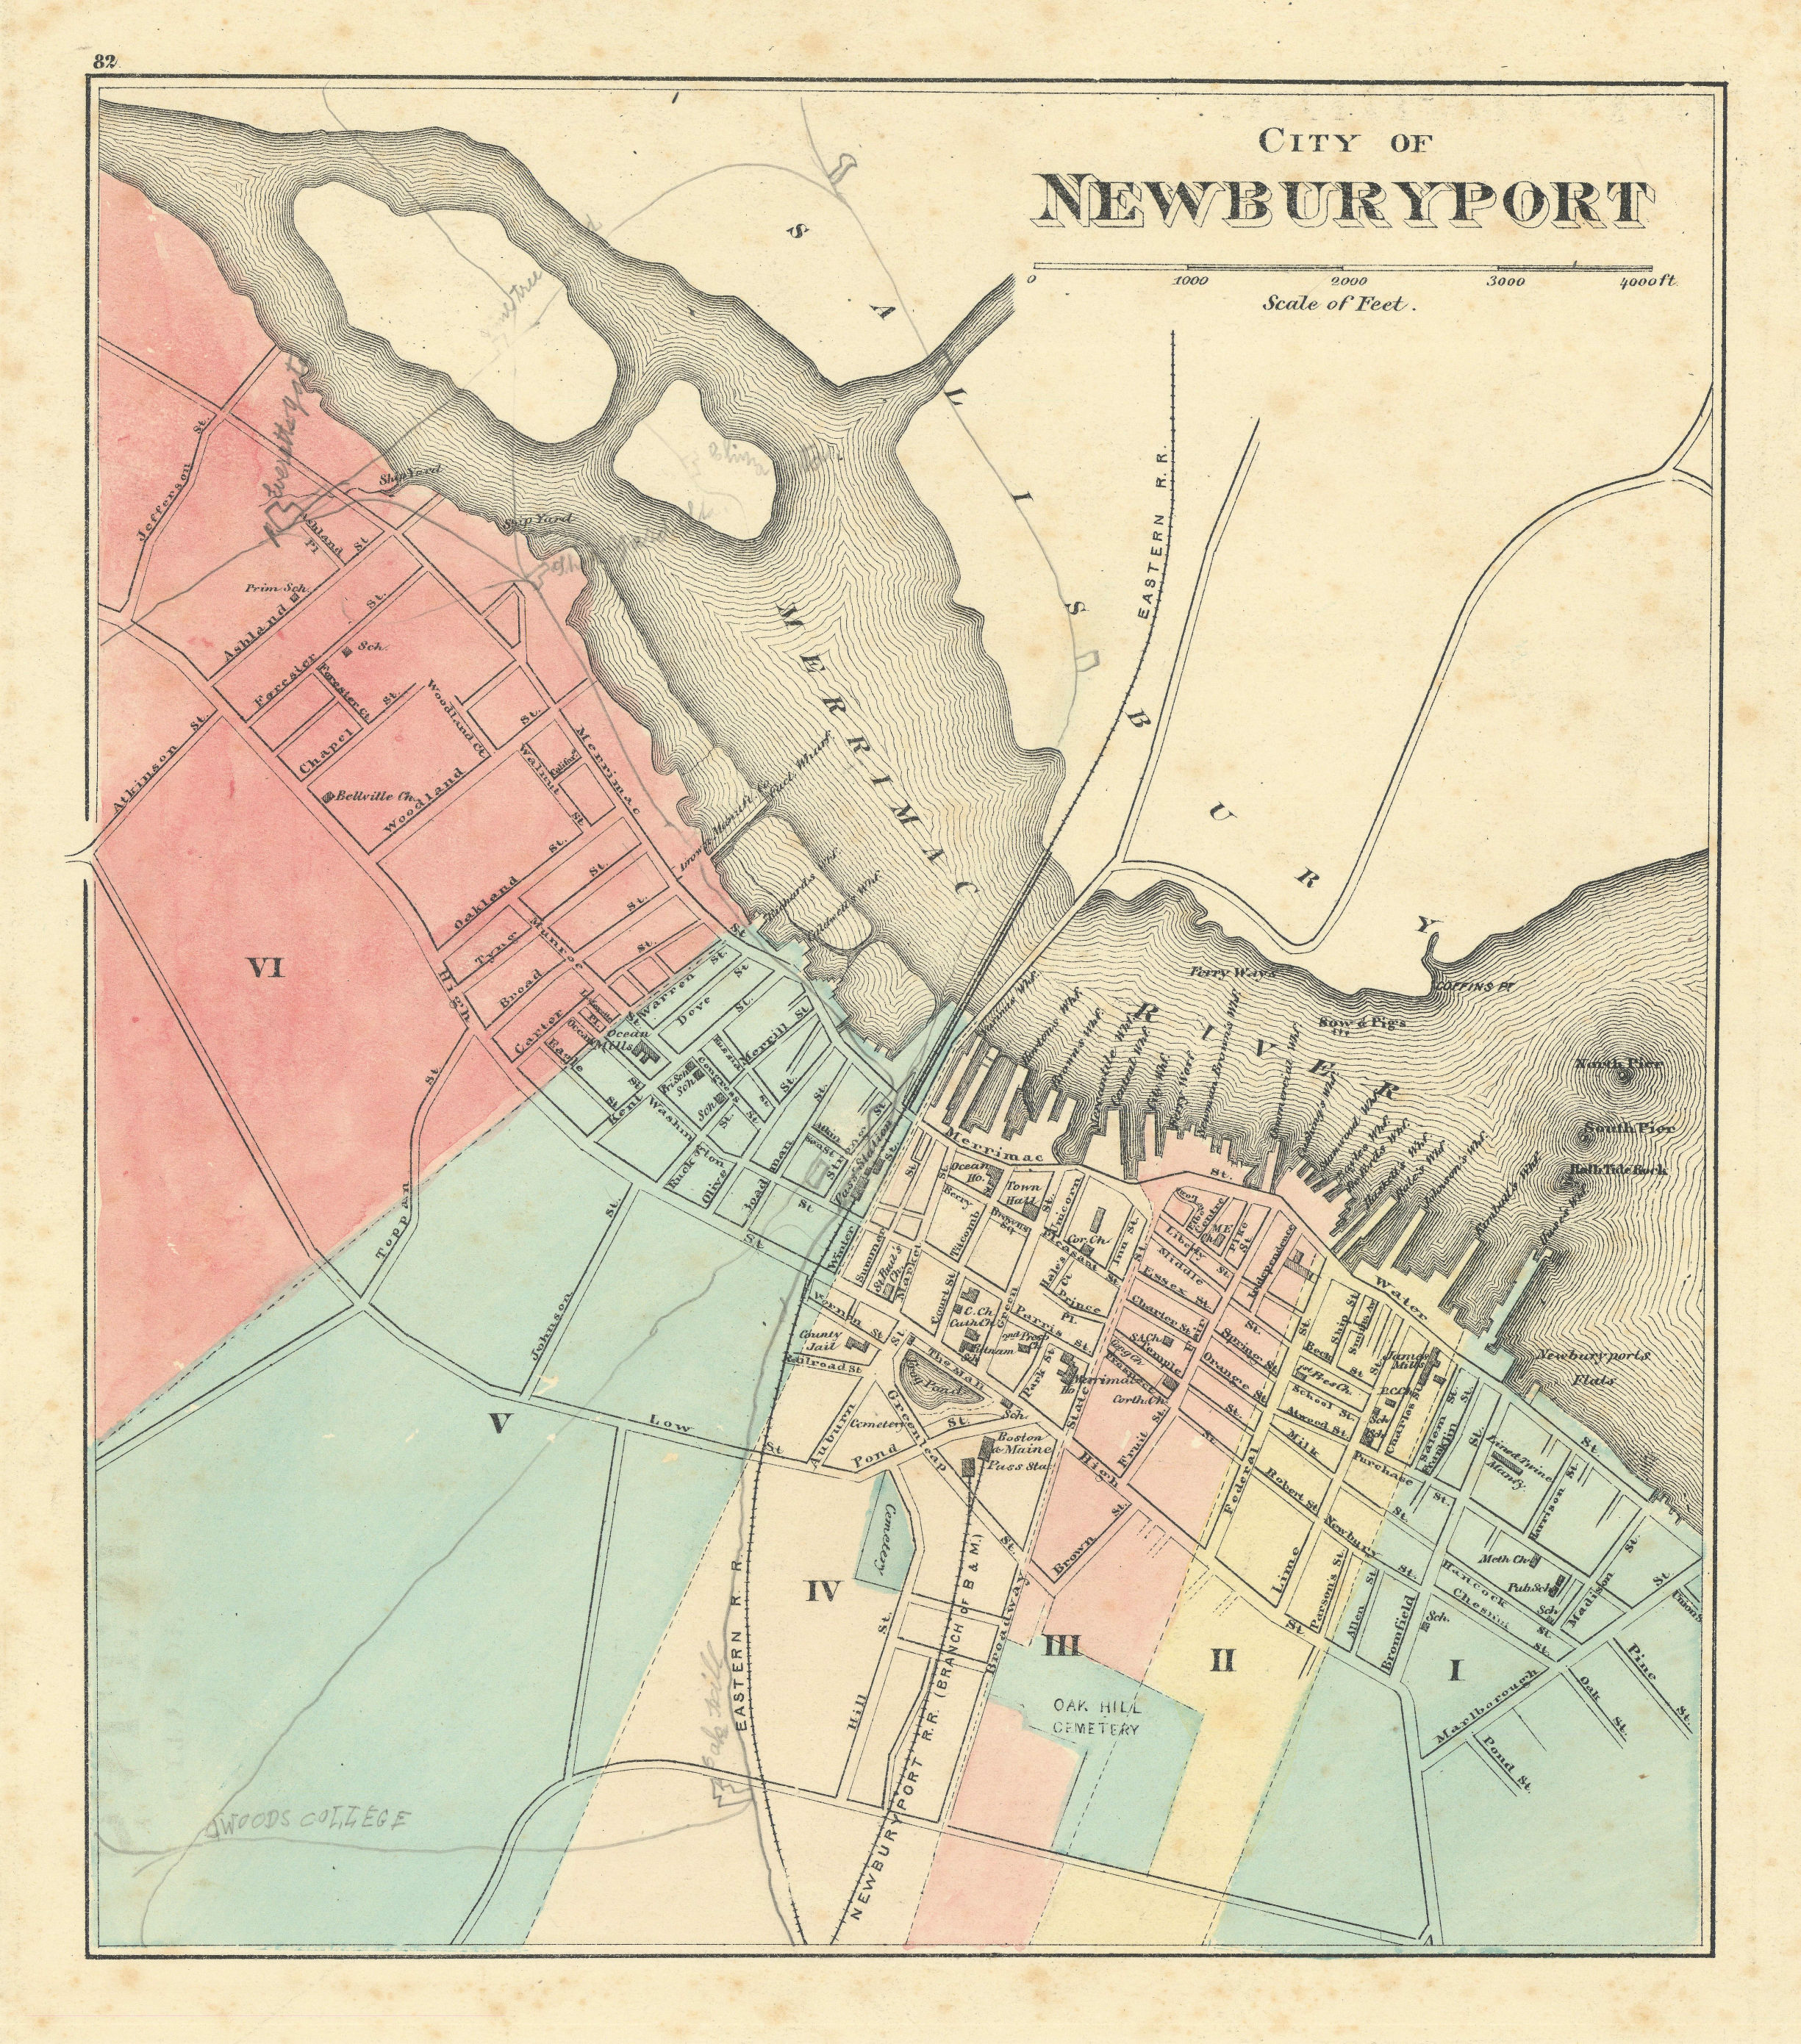 Associate Product City of Newburyport, Massachusetts. Town plan. WALLING & GRAY 1871 old map